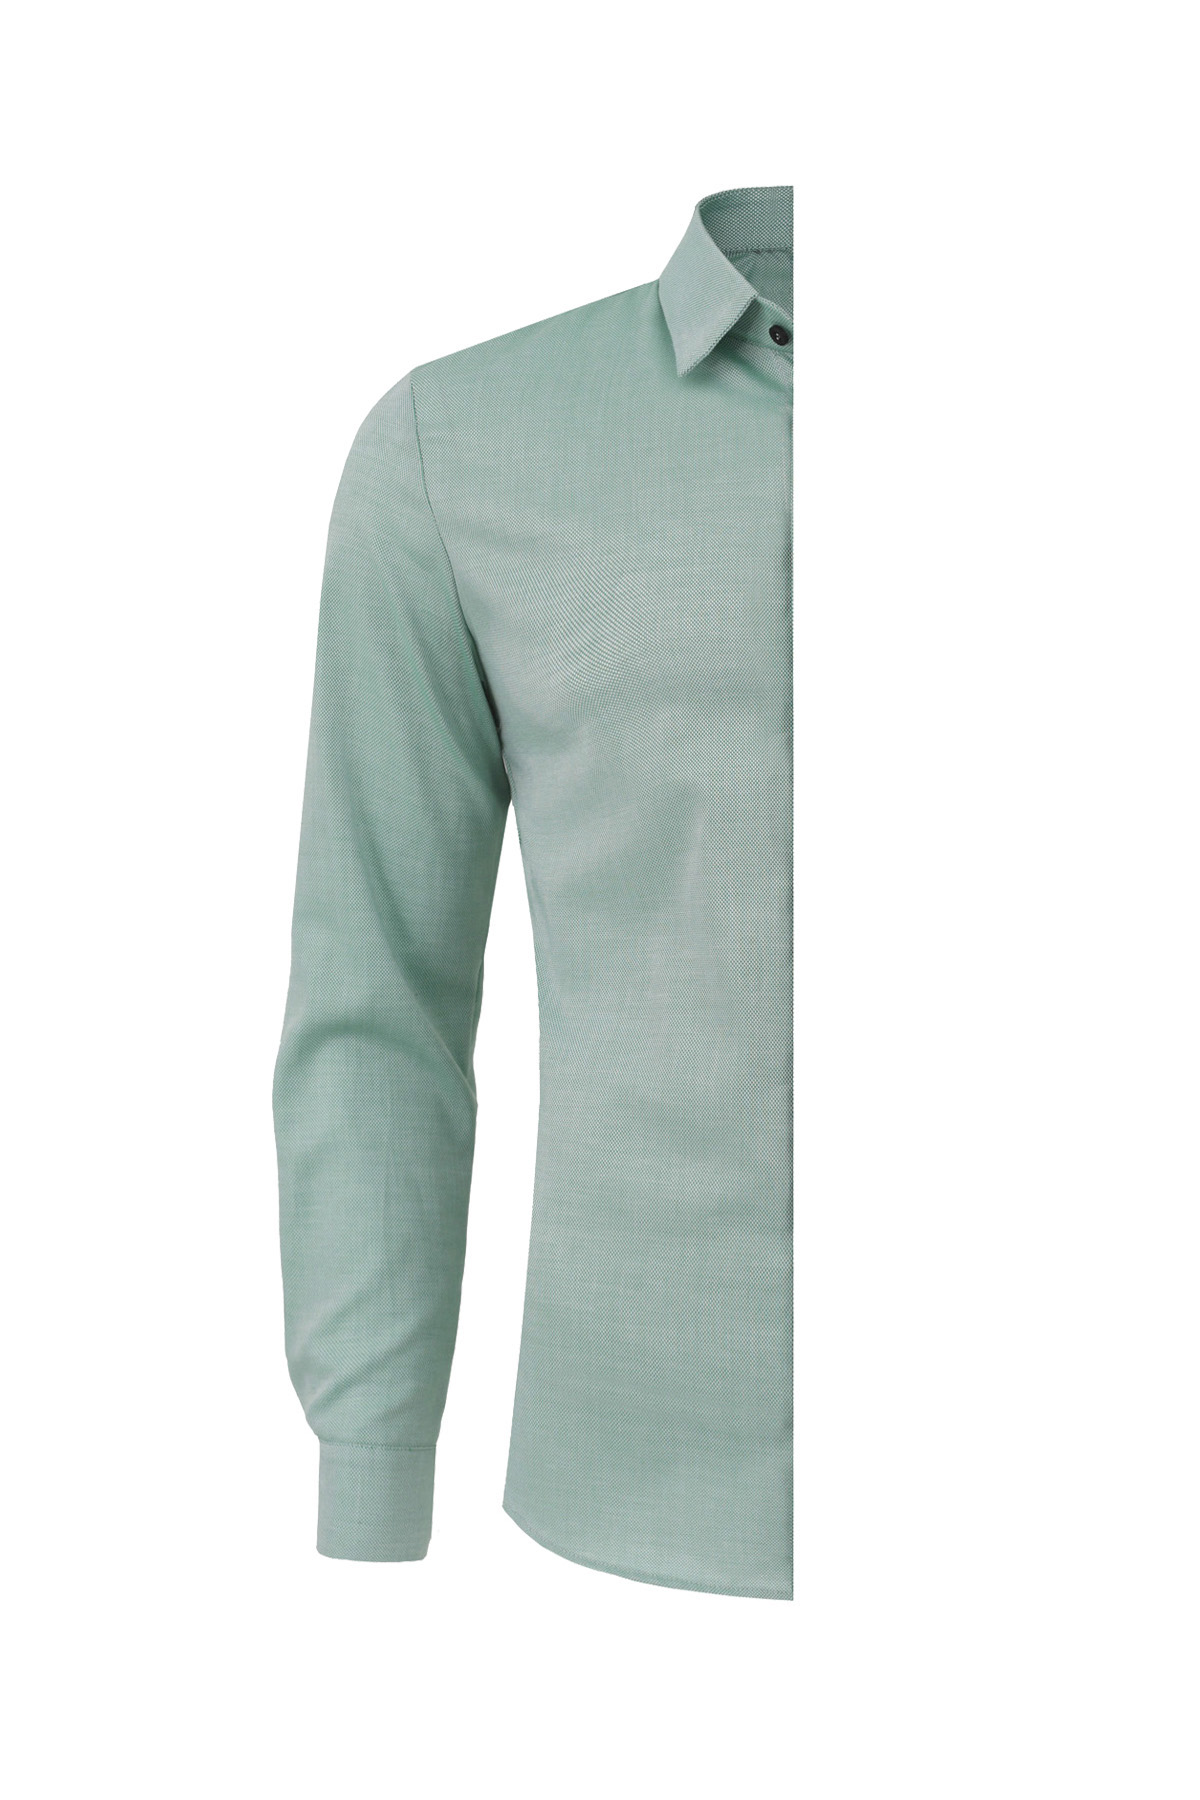 Green slim fit shirt - right